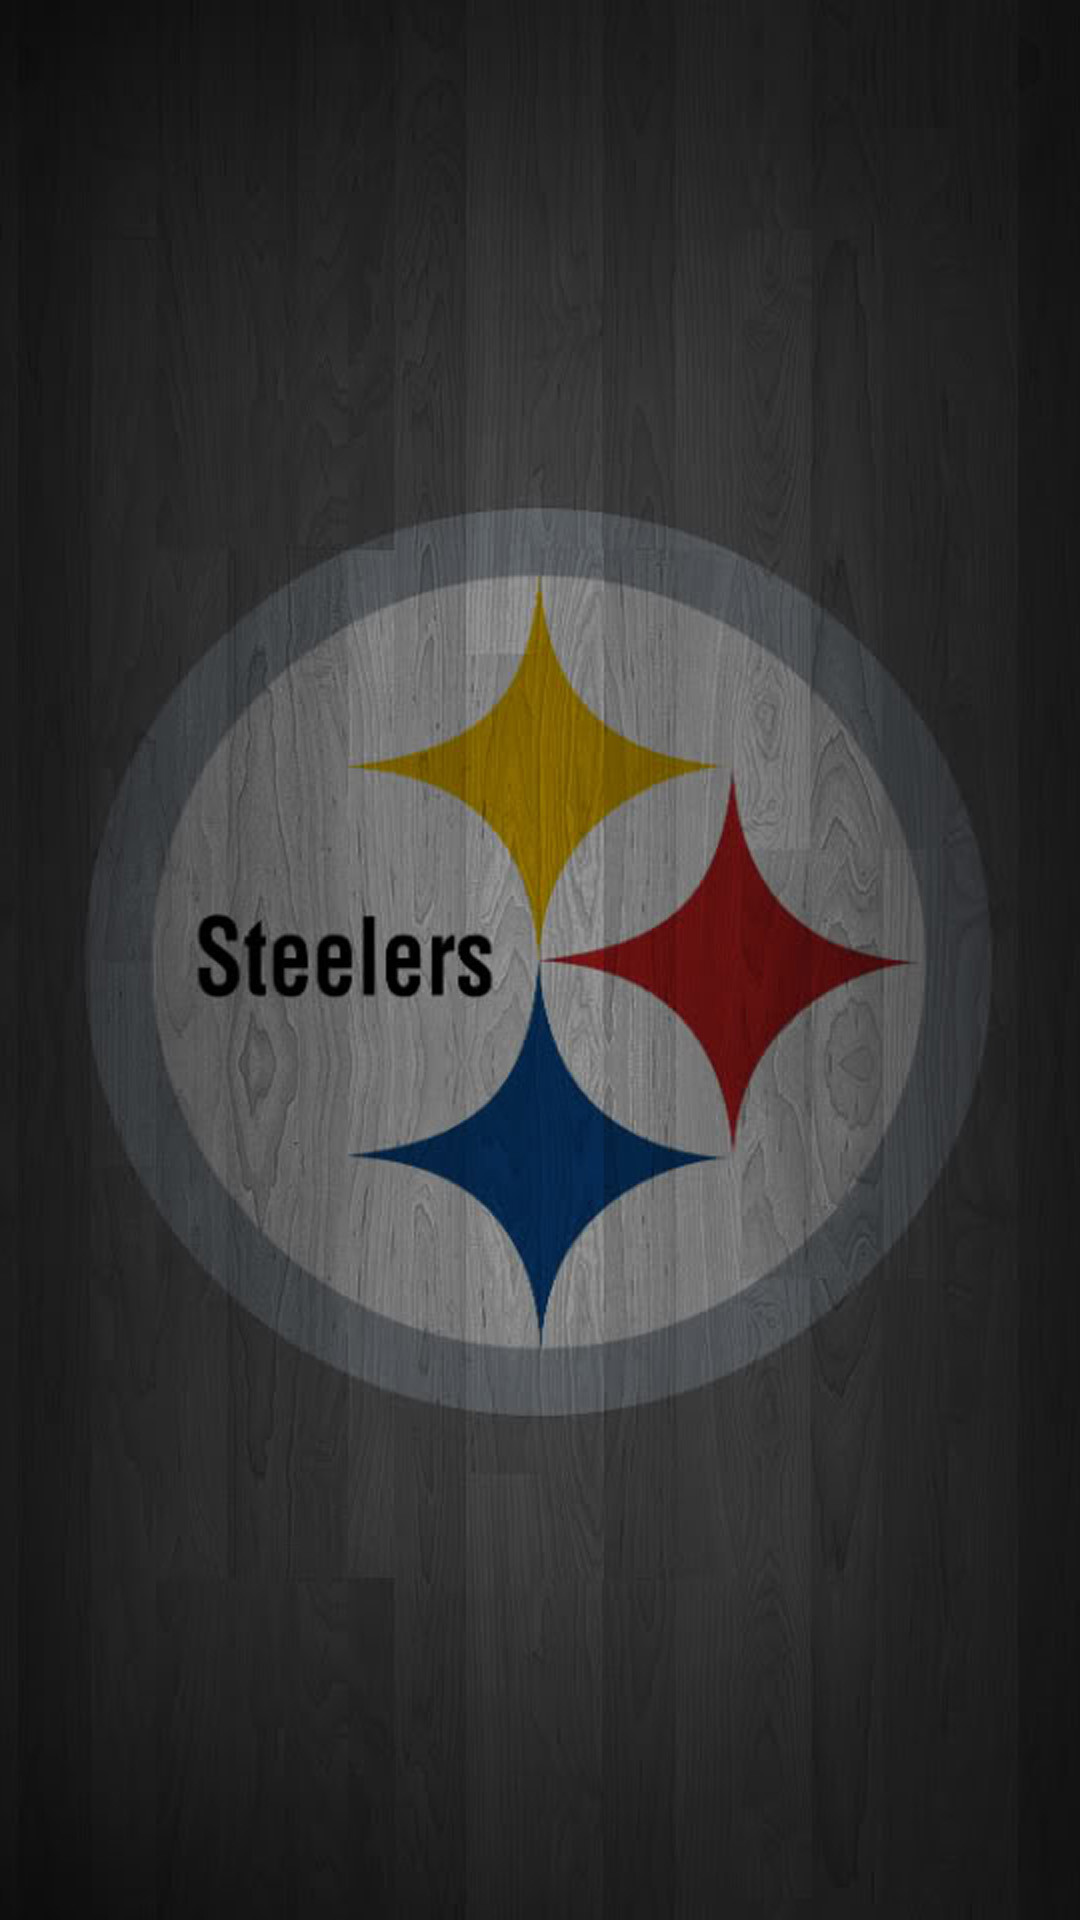 1080x1920 Steelers Mobile Wallpaper